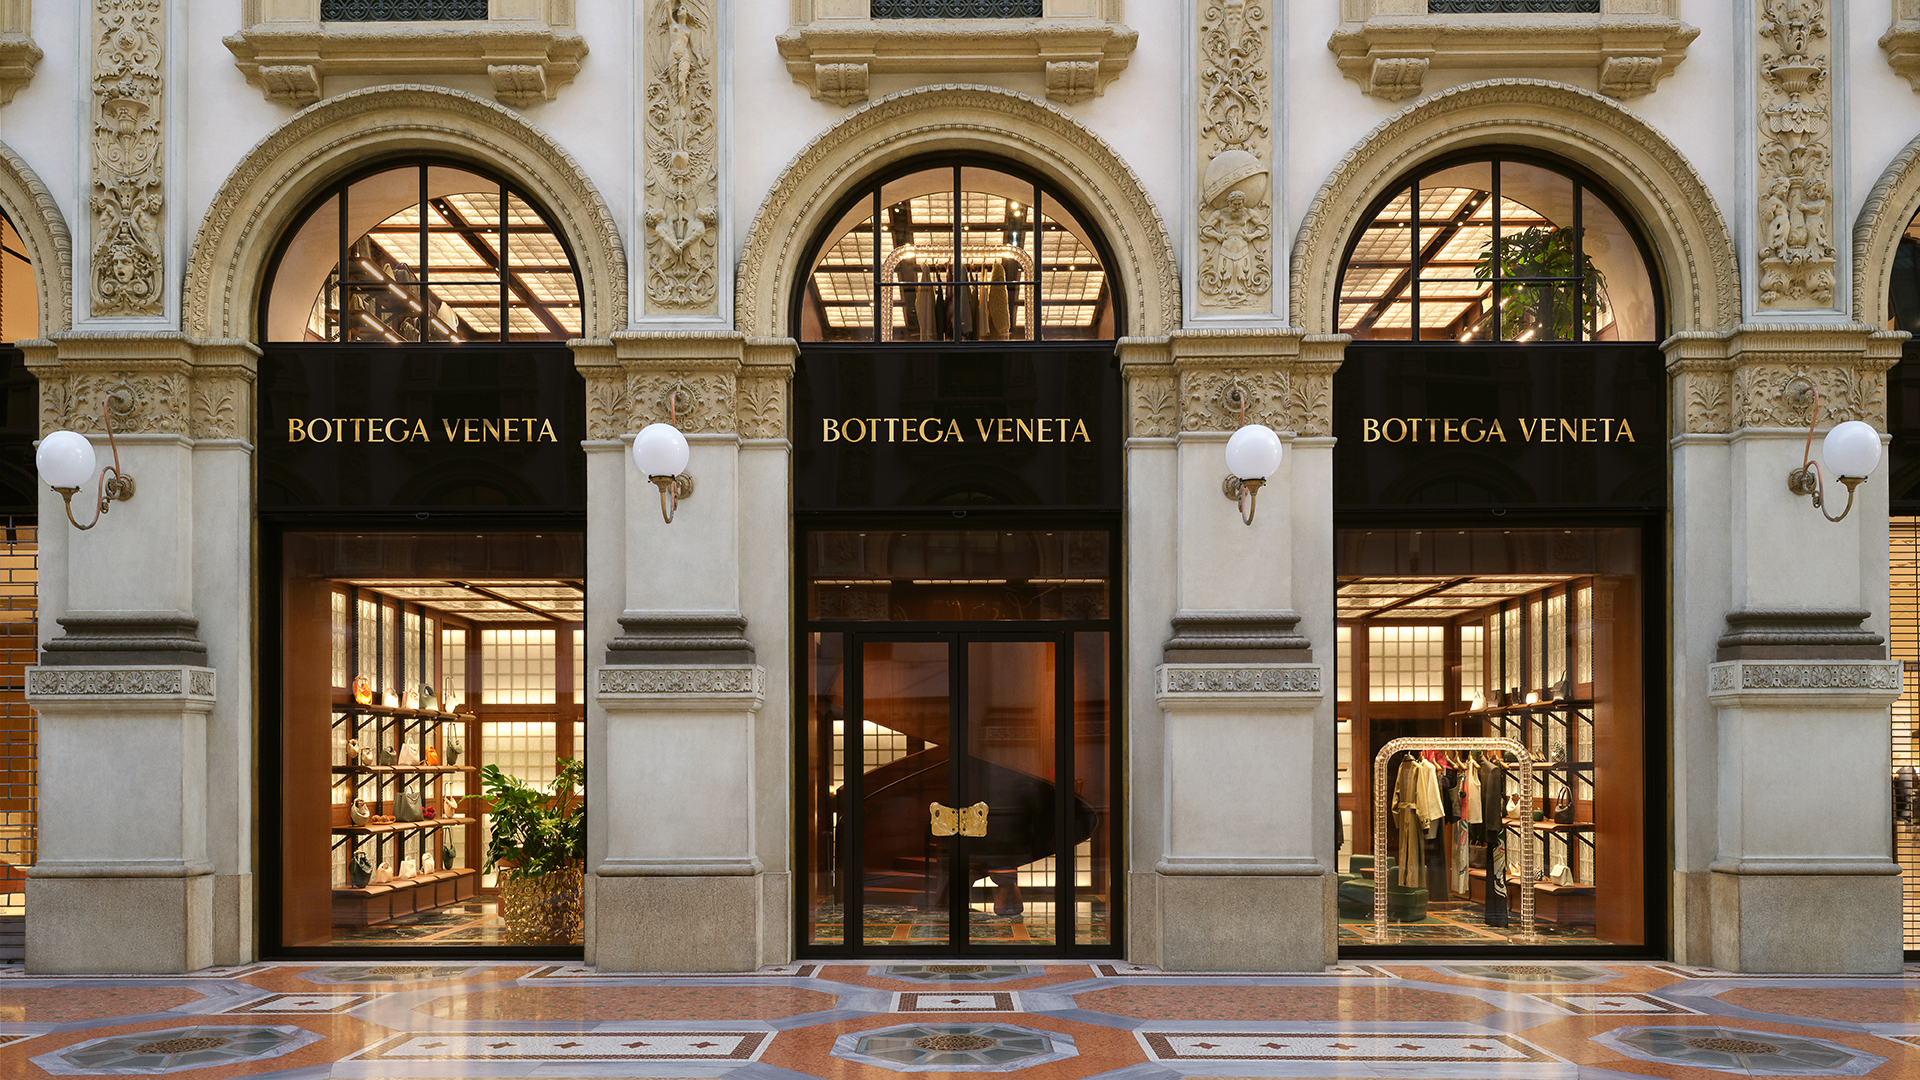 The façade of Bottega Veneta's boutique in the ornate Galleria Vittorio Emanuele II, featuring arched windows and intricate architectural details.